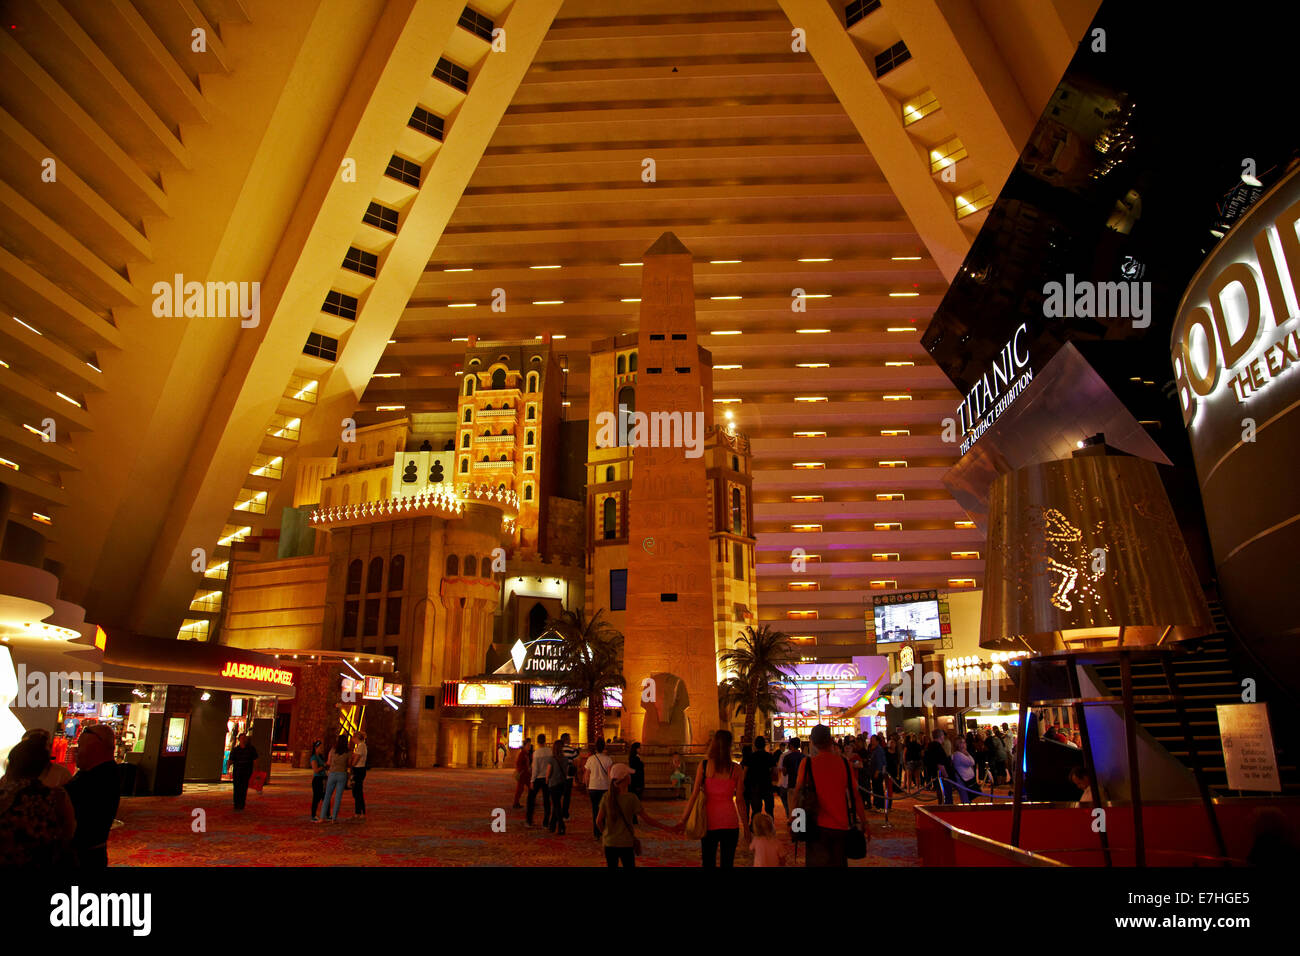 Casino de luxor fotografías e imágenes de alta resolución - Alamy